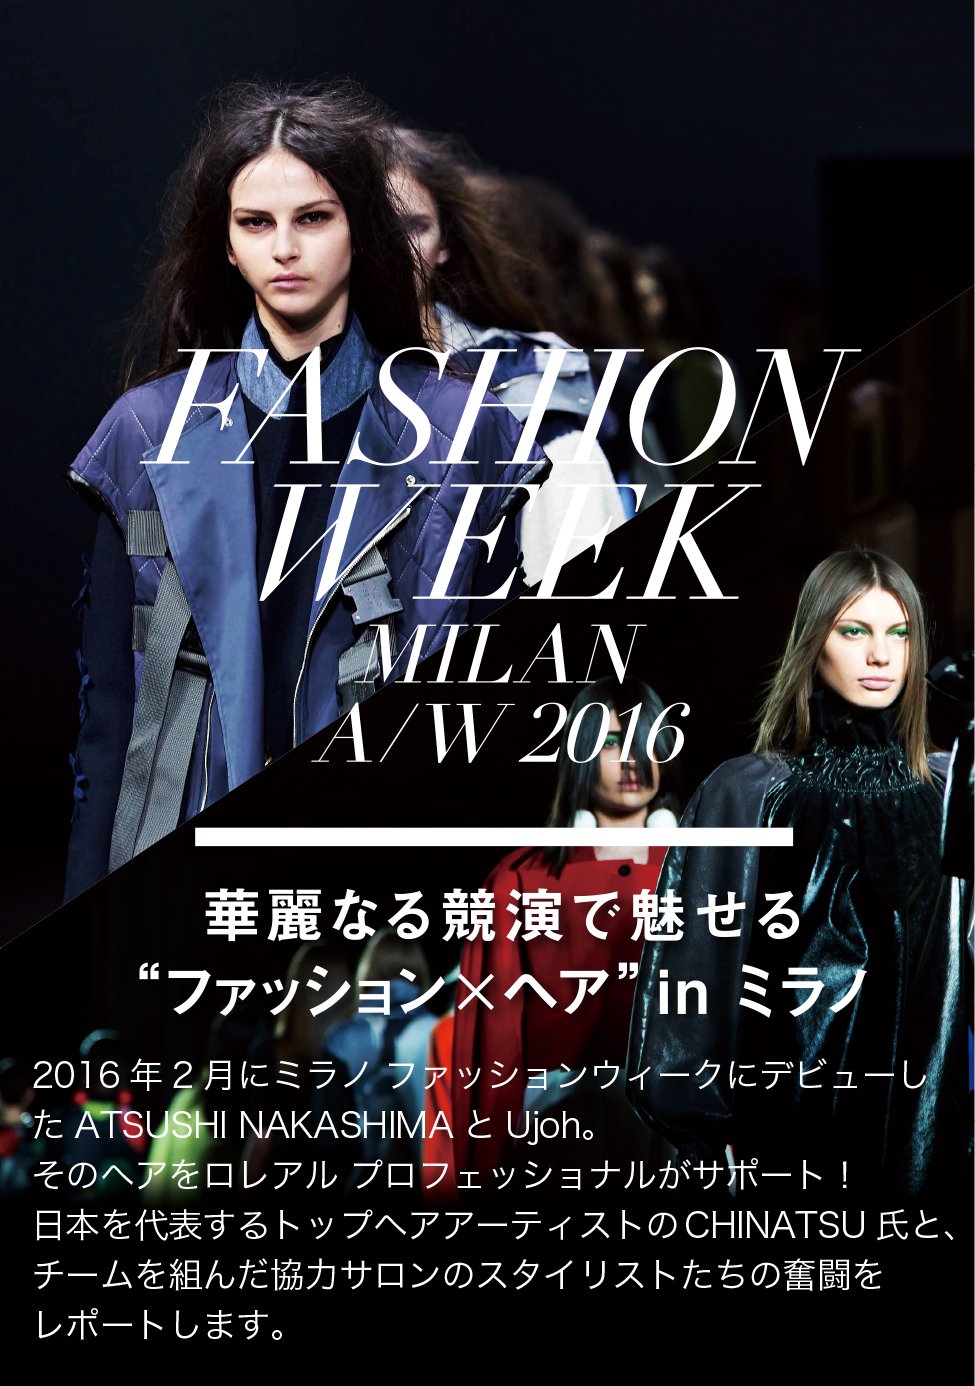 FASHION WEEK MILLAN A/W 2016 華麗なる競演で魅せる“ファッション×ヘア”in ミラノ・東京